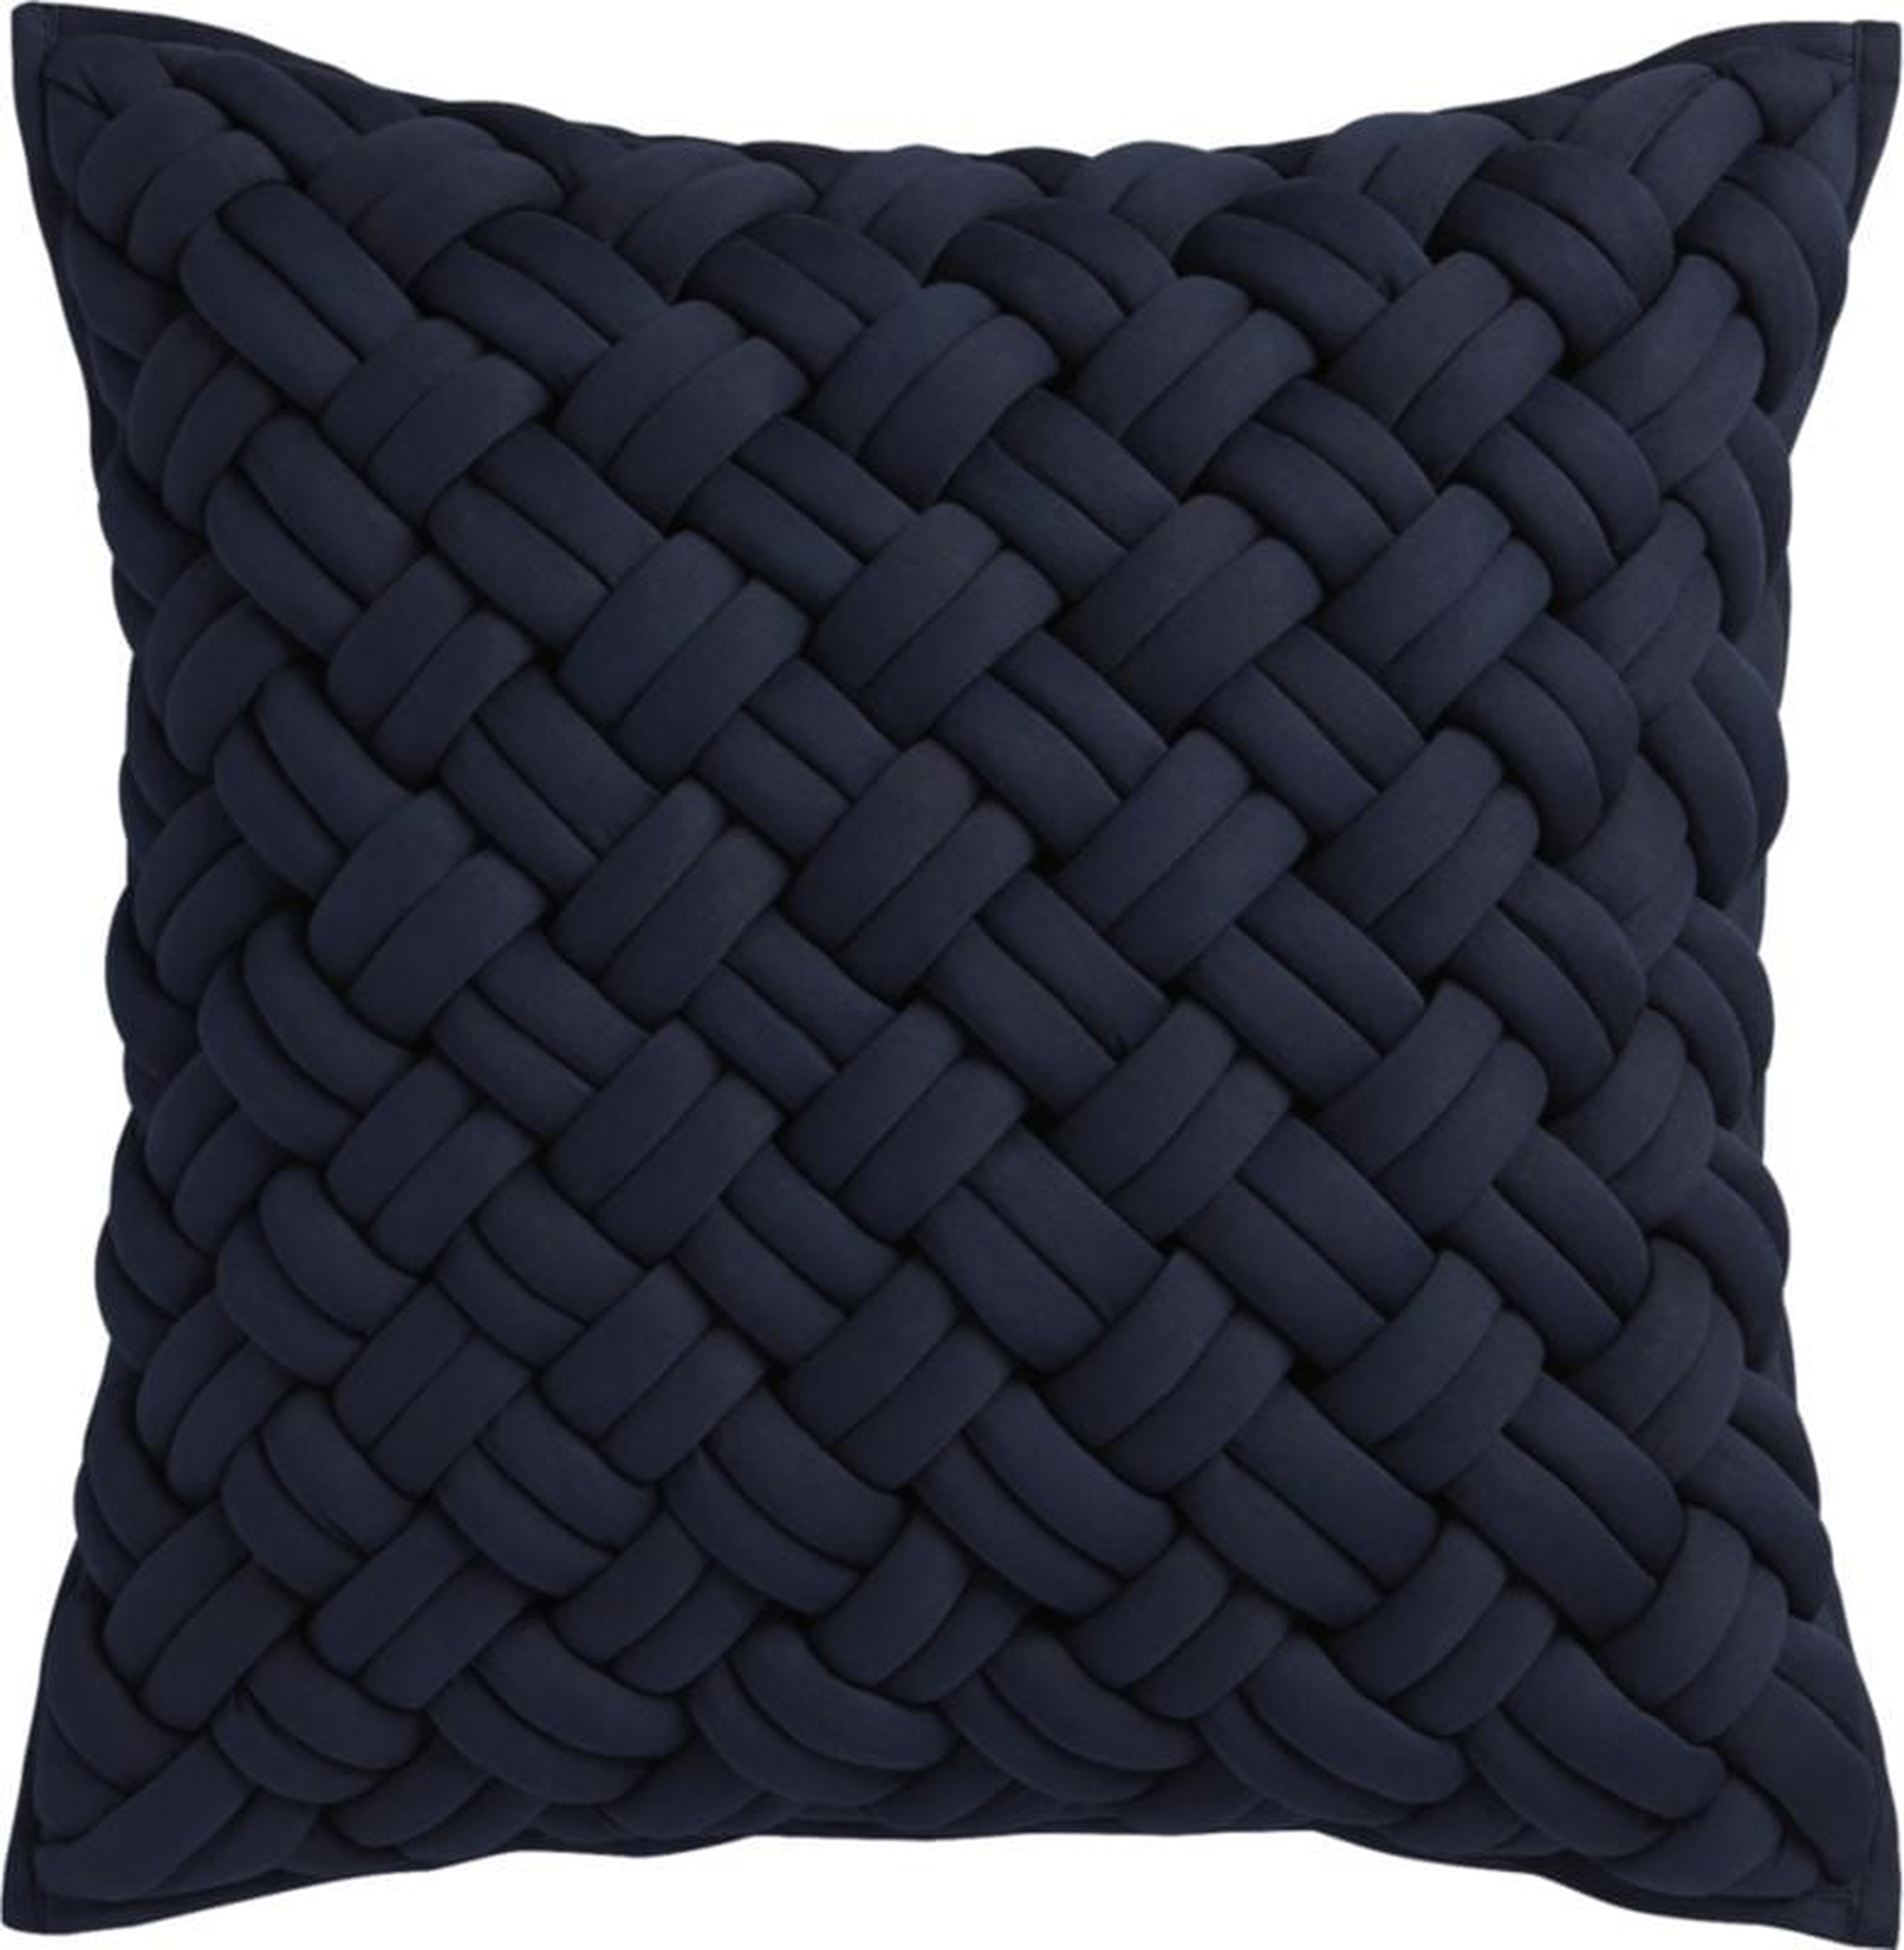 20" jersey interknit navy pillow with down-alternative insert - CB2